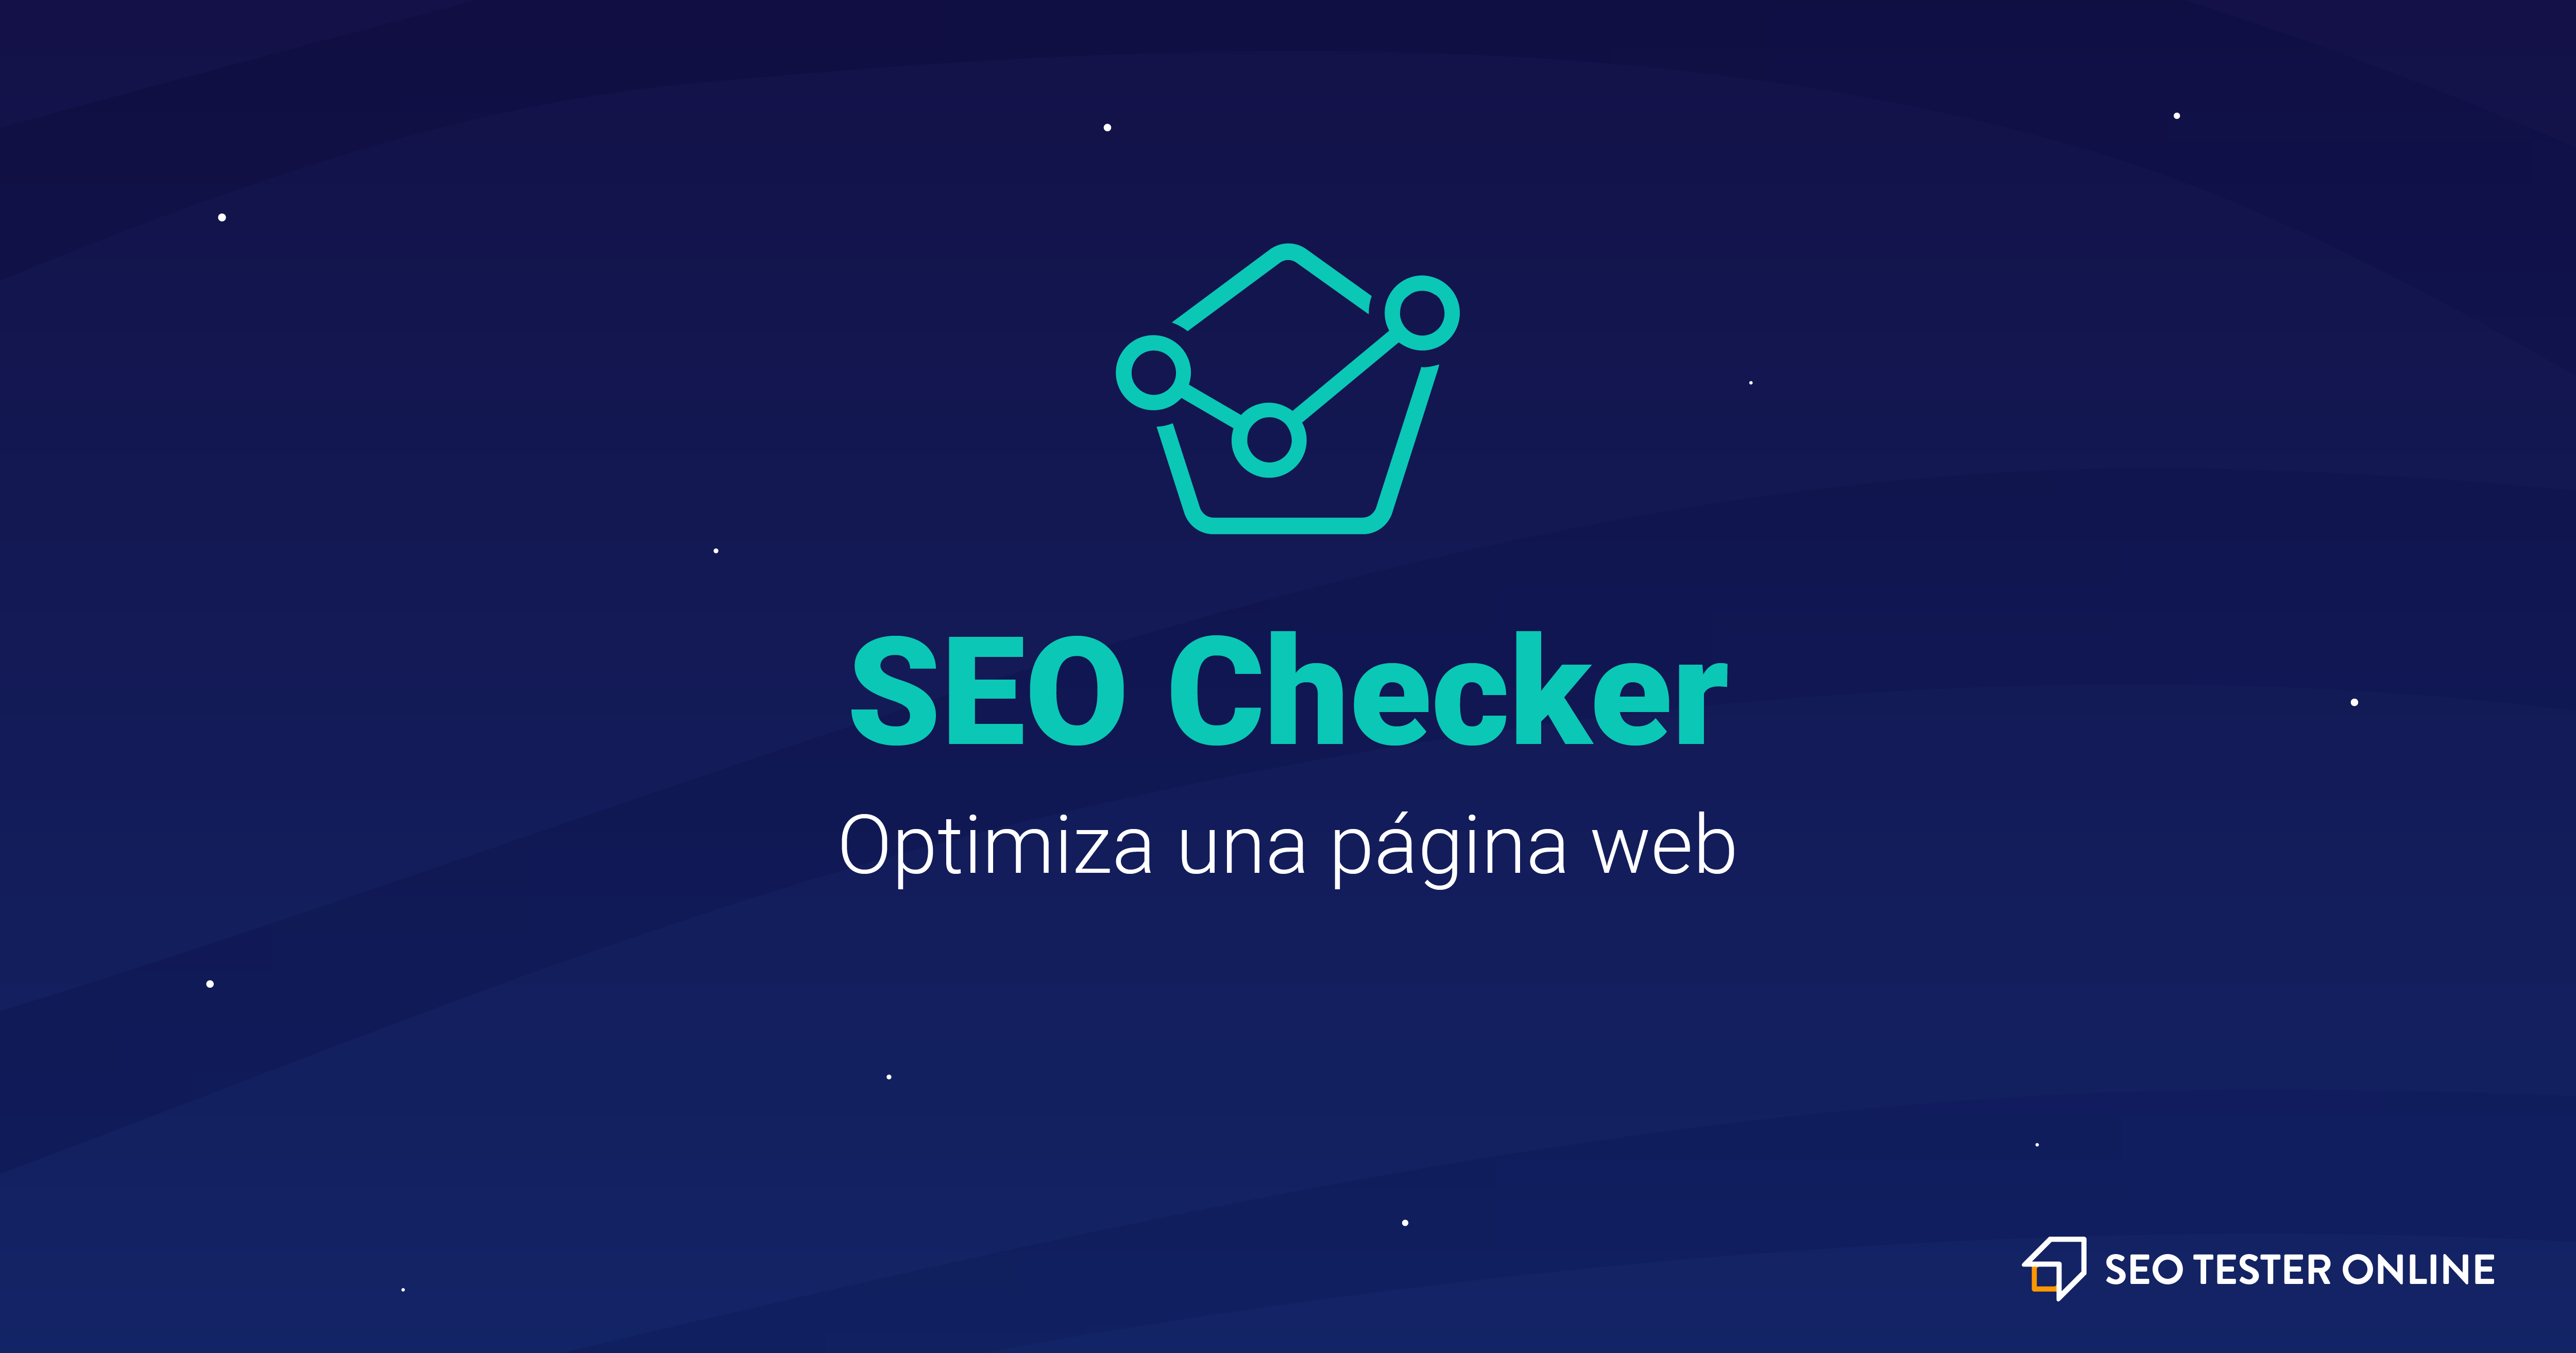 SEO Checker 7.4 for ios instal free